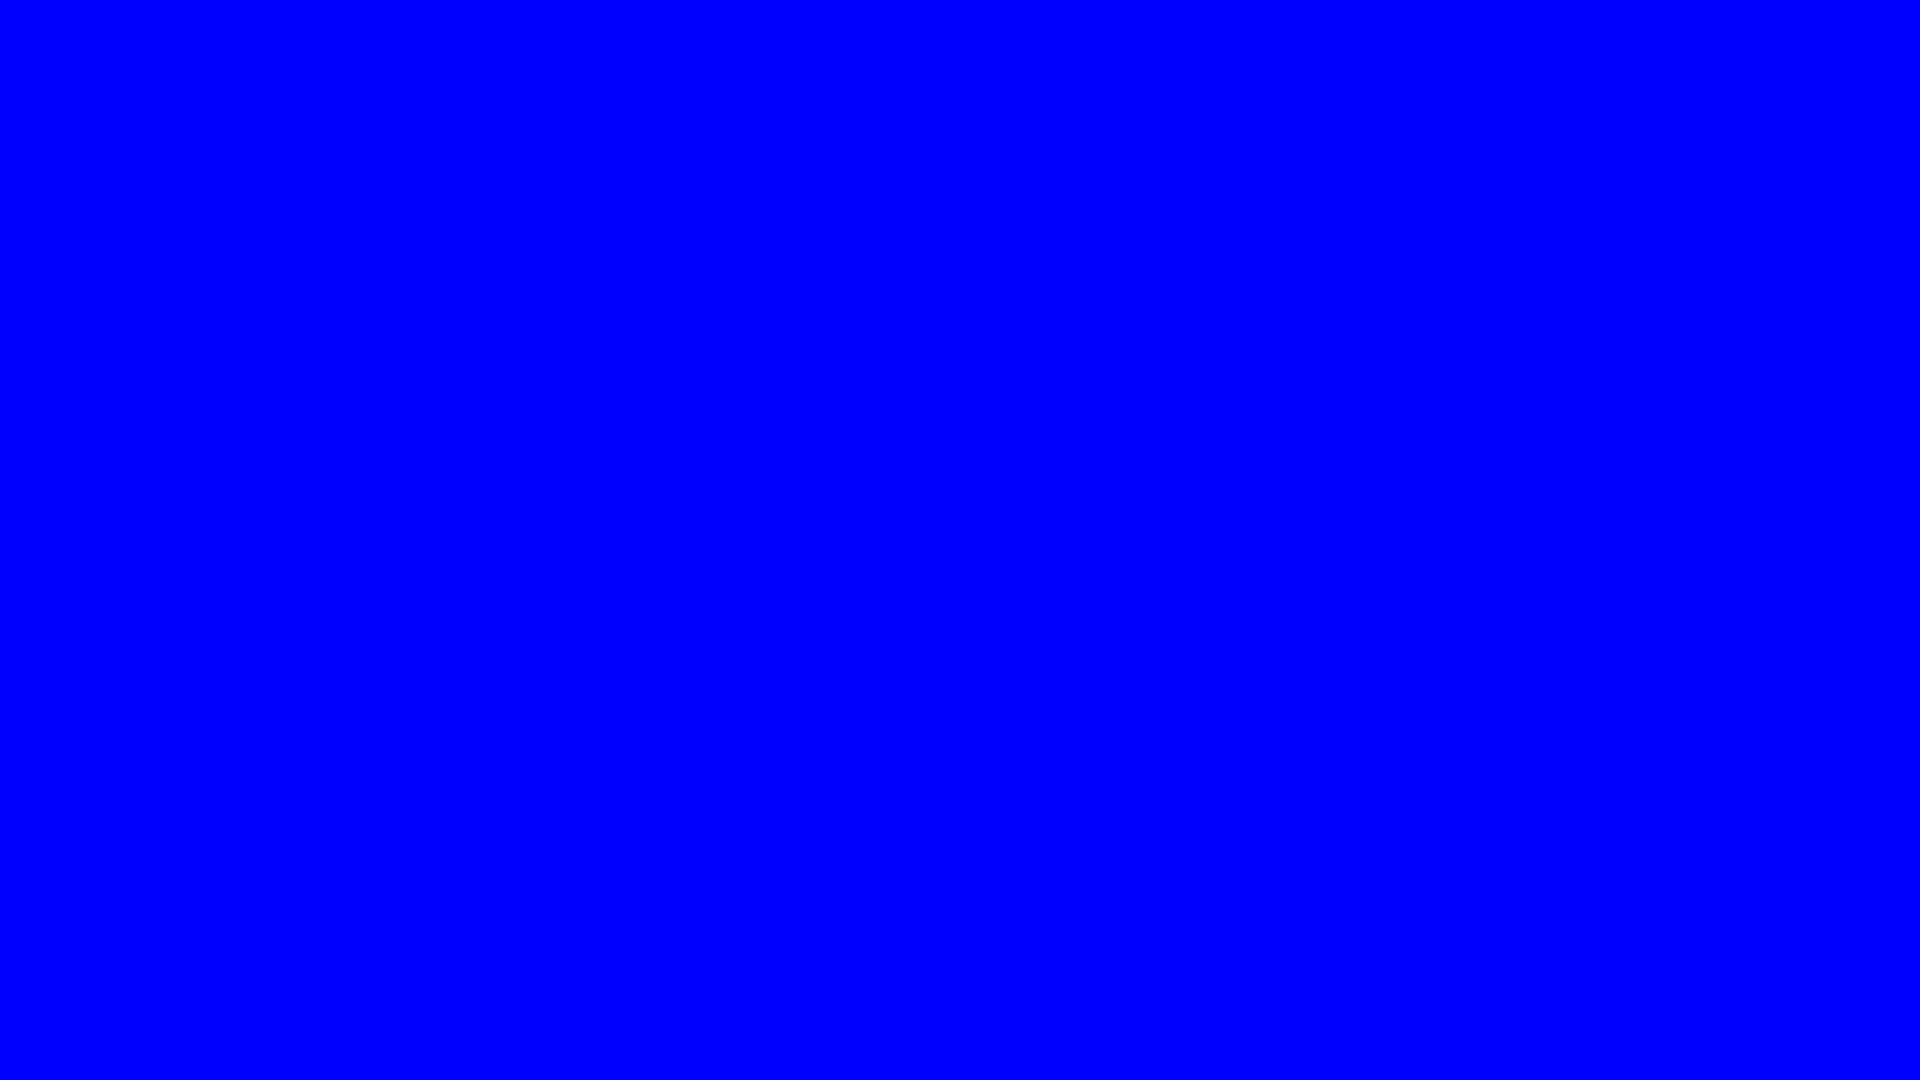 Vibrant Blue Background